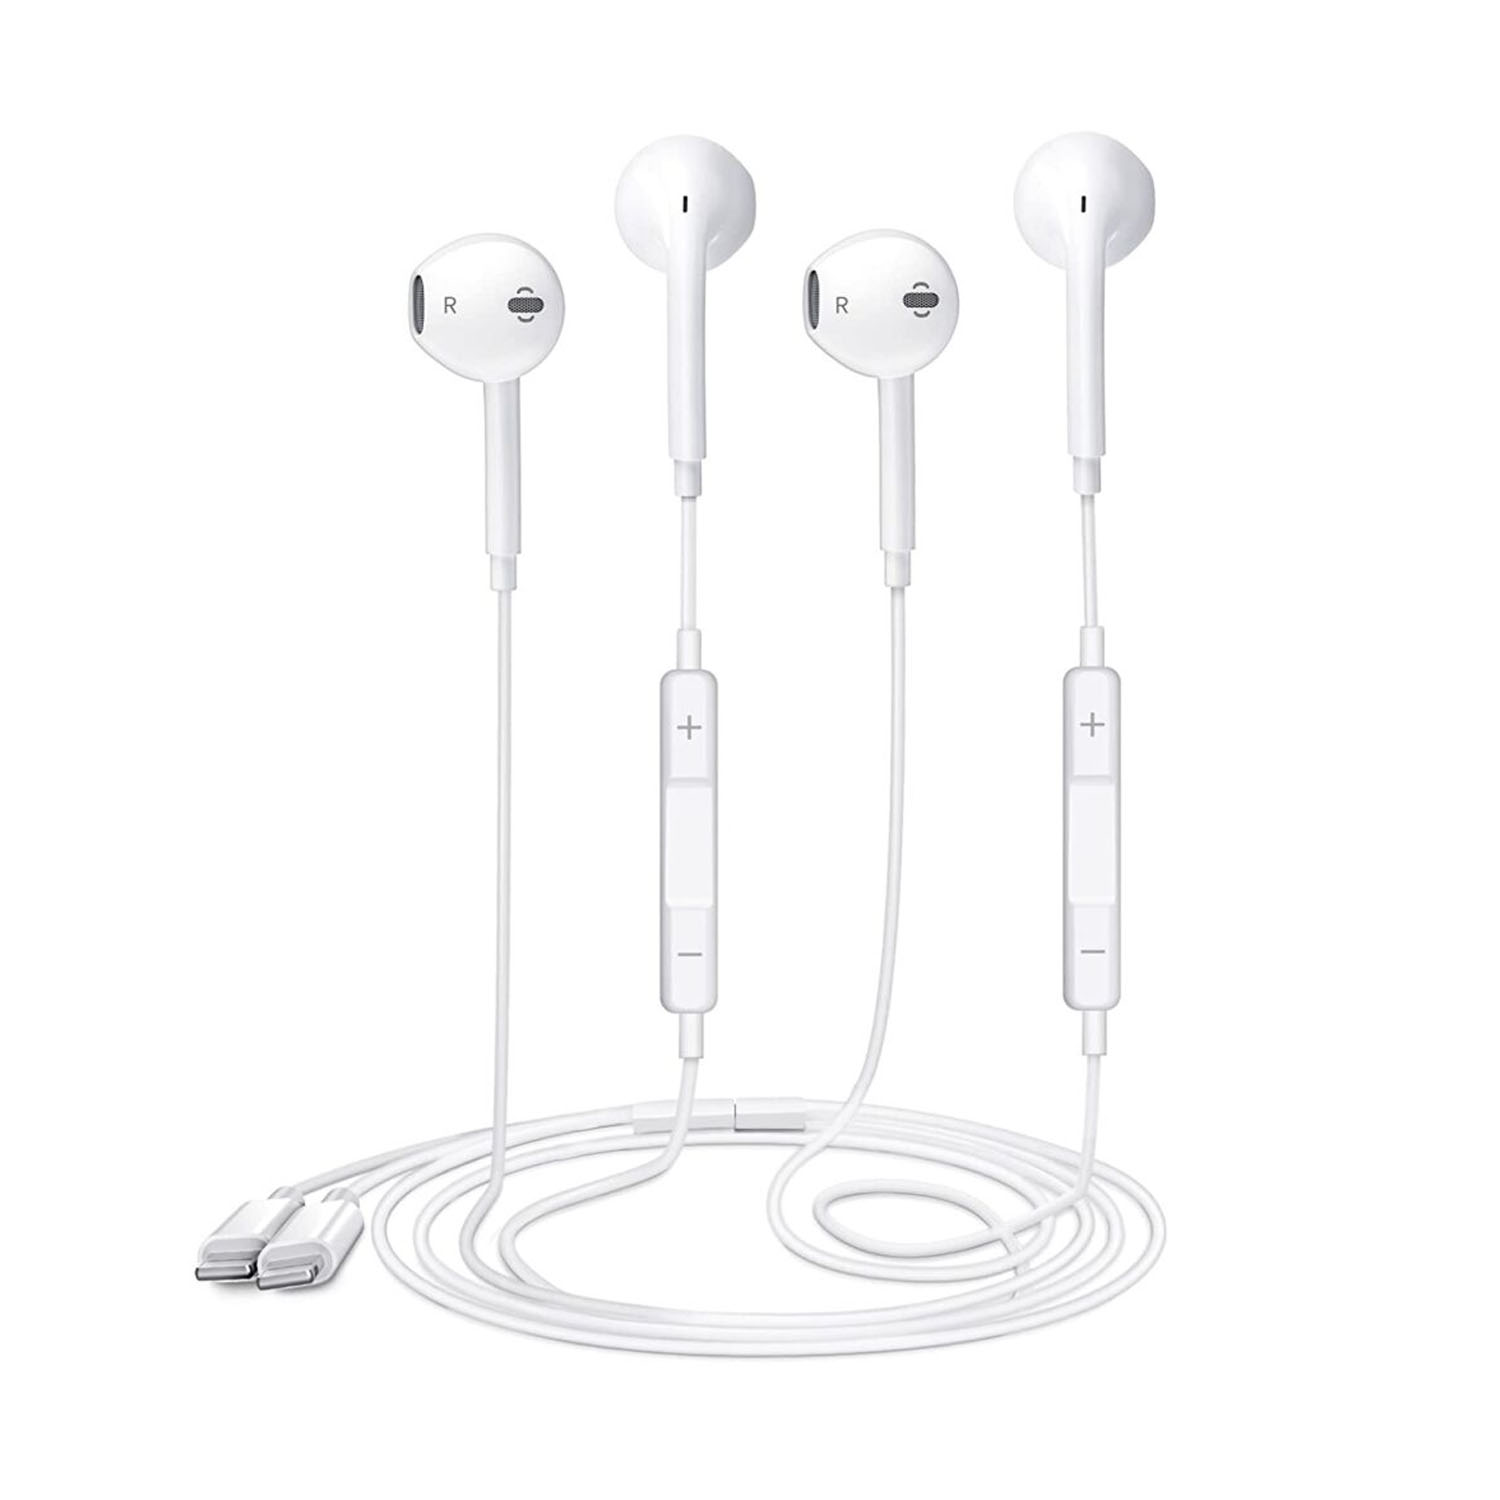 Apple EarPods Headphones with Lightning  